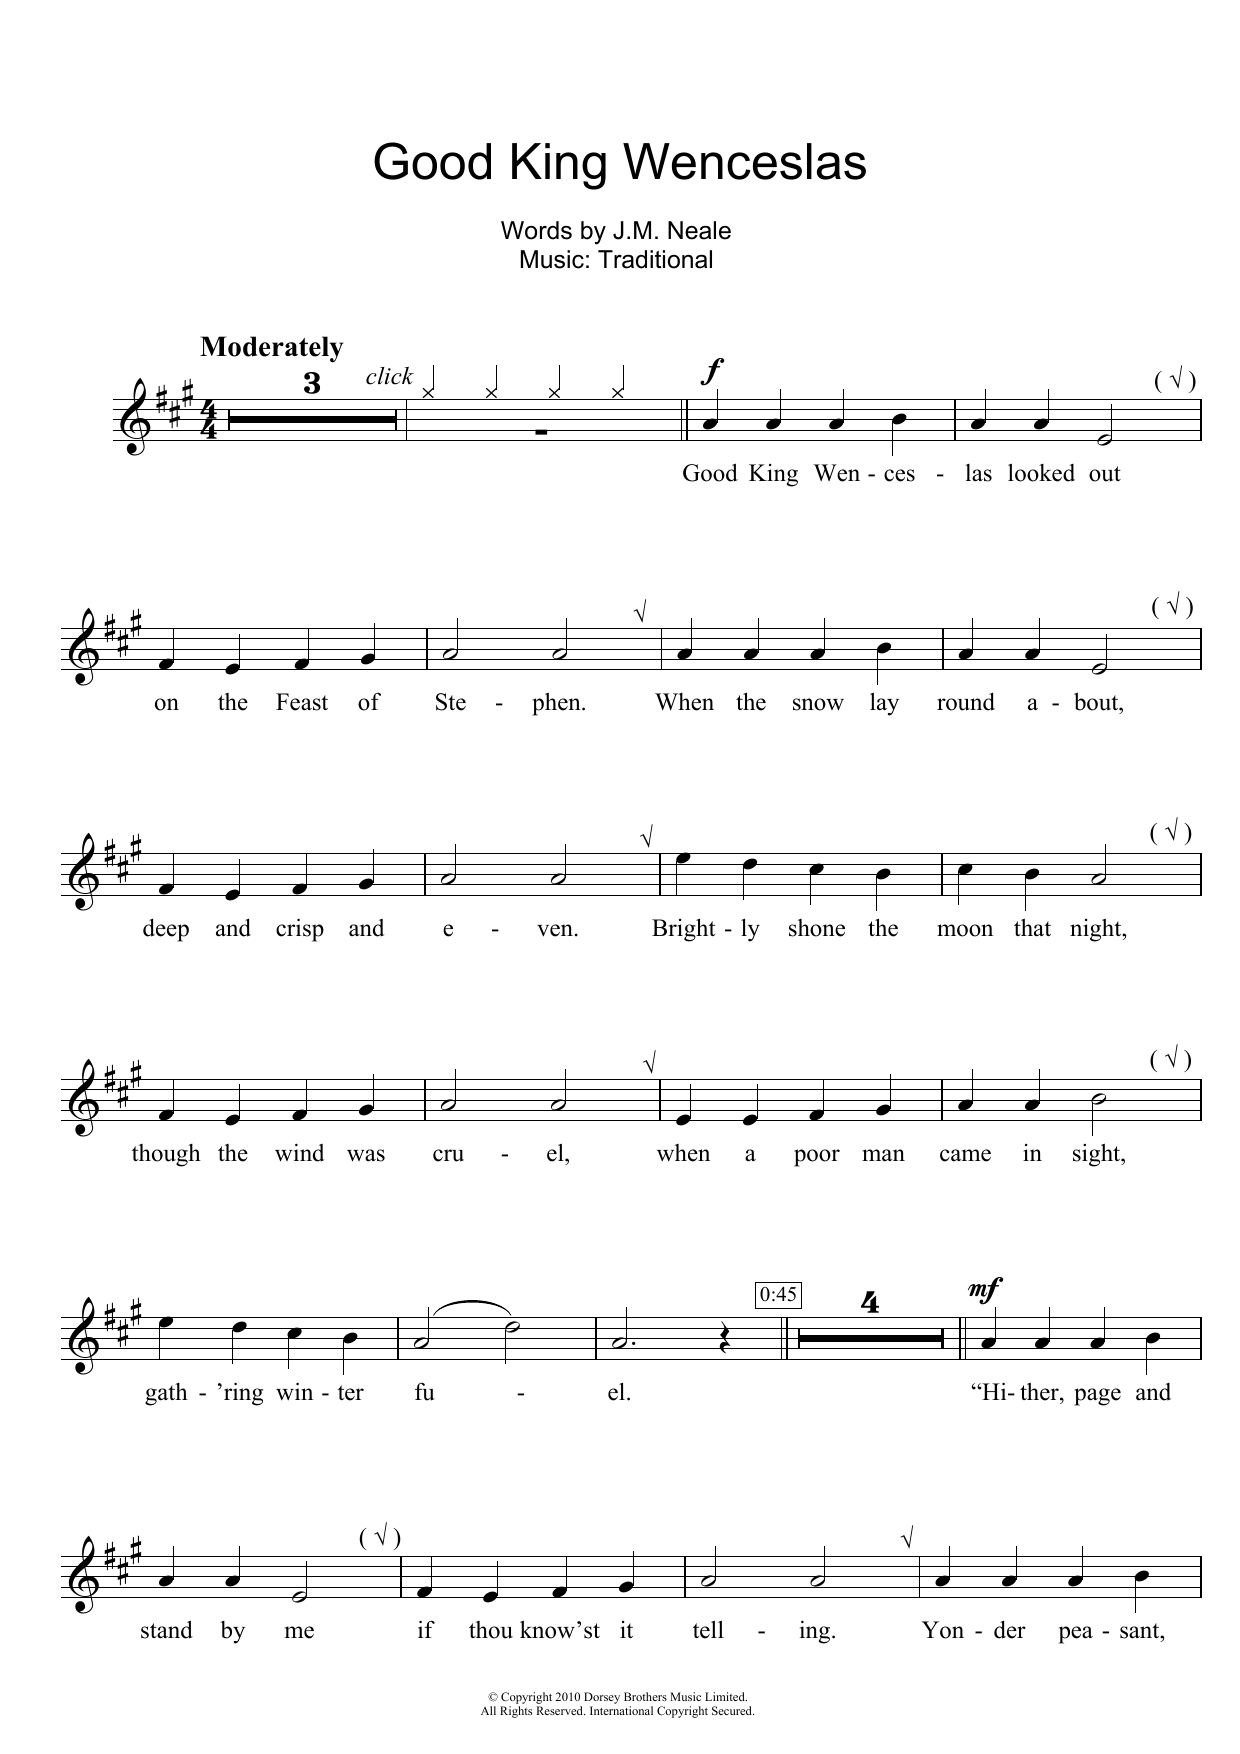 Traditional Carol Good King Wenceslas Sheet Music Notes & Chords for Keyboard - Download or Print PDF